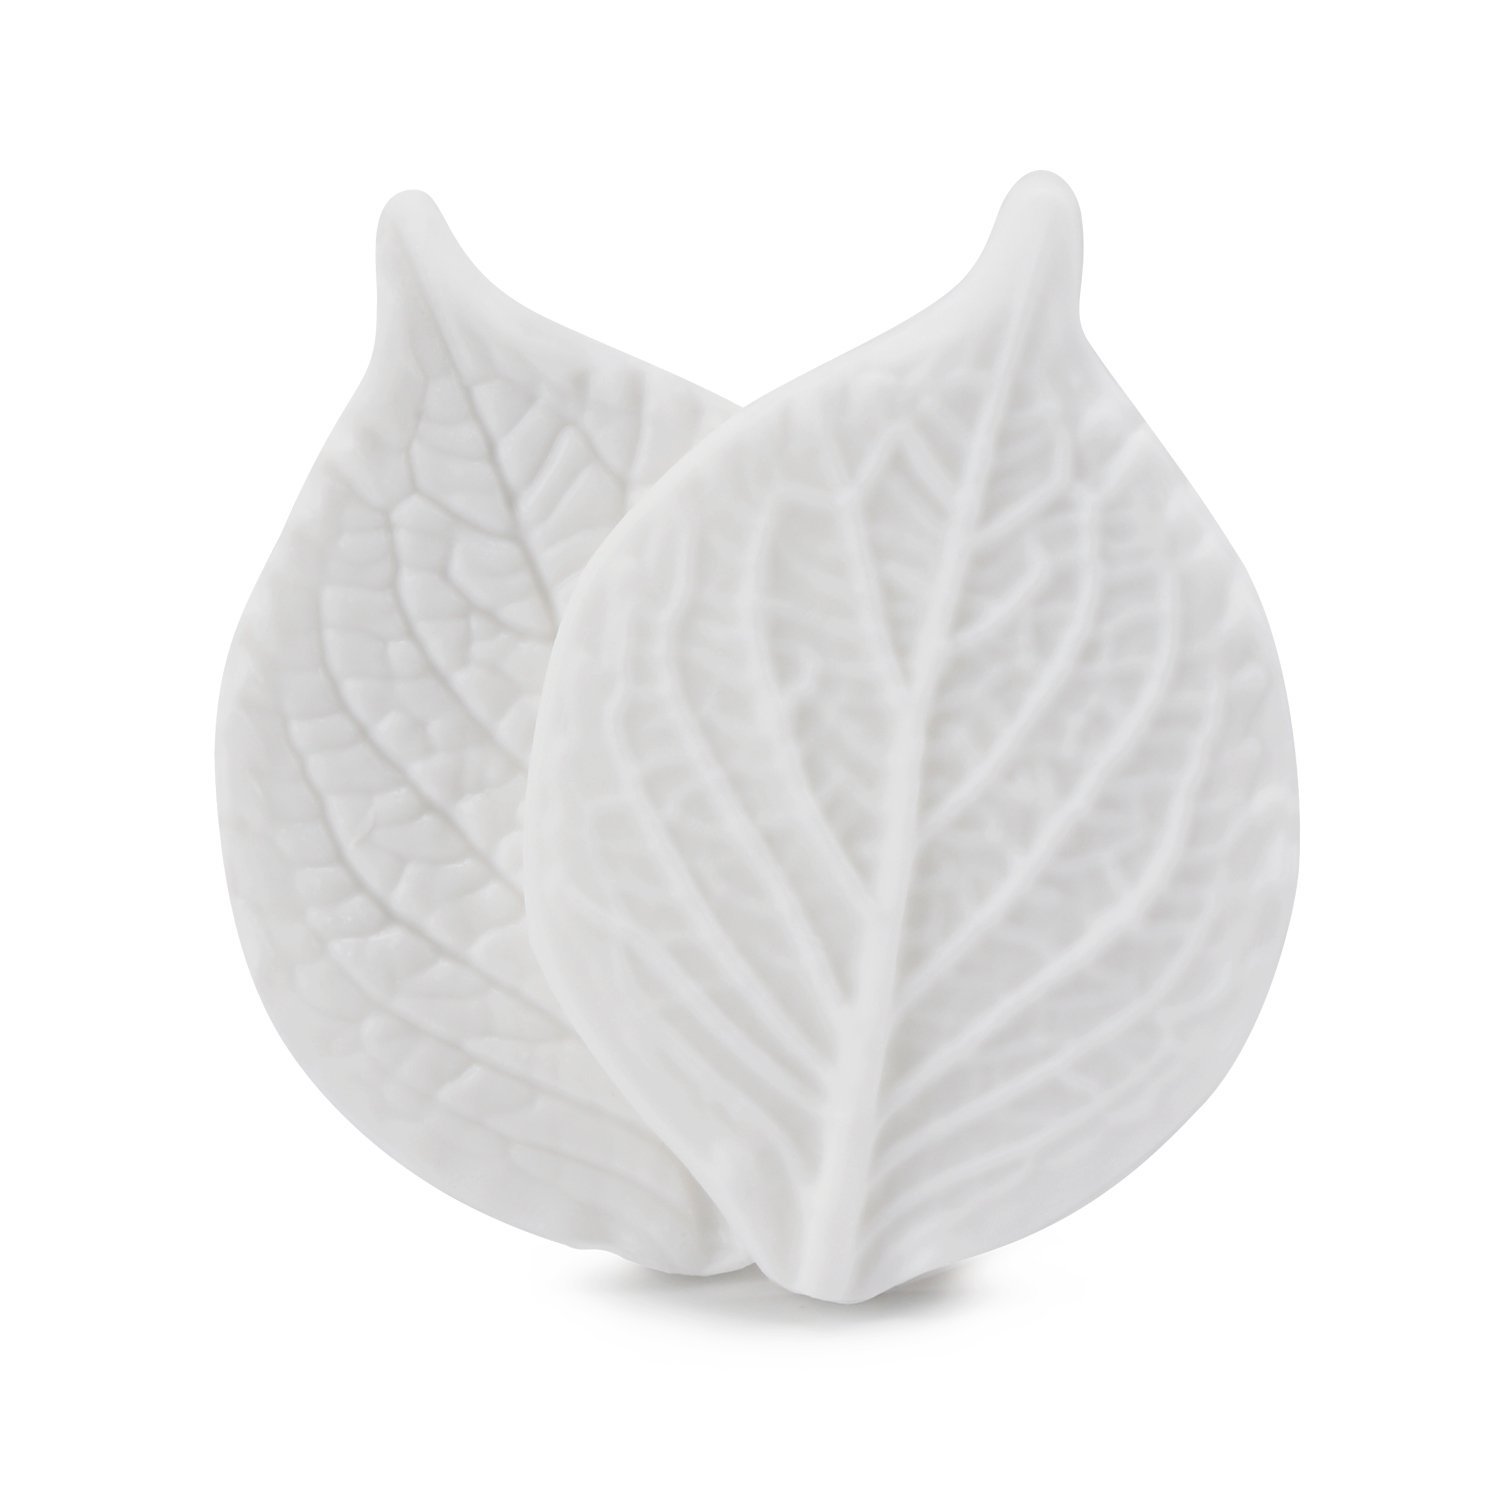 E002  Leaf Press Mold Shaped leaf vein Silicone Mold Cake Decoration Fondant …